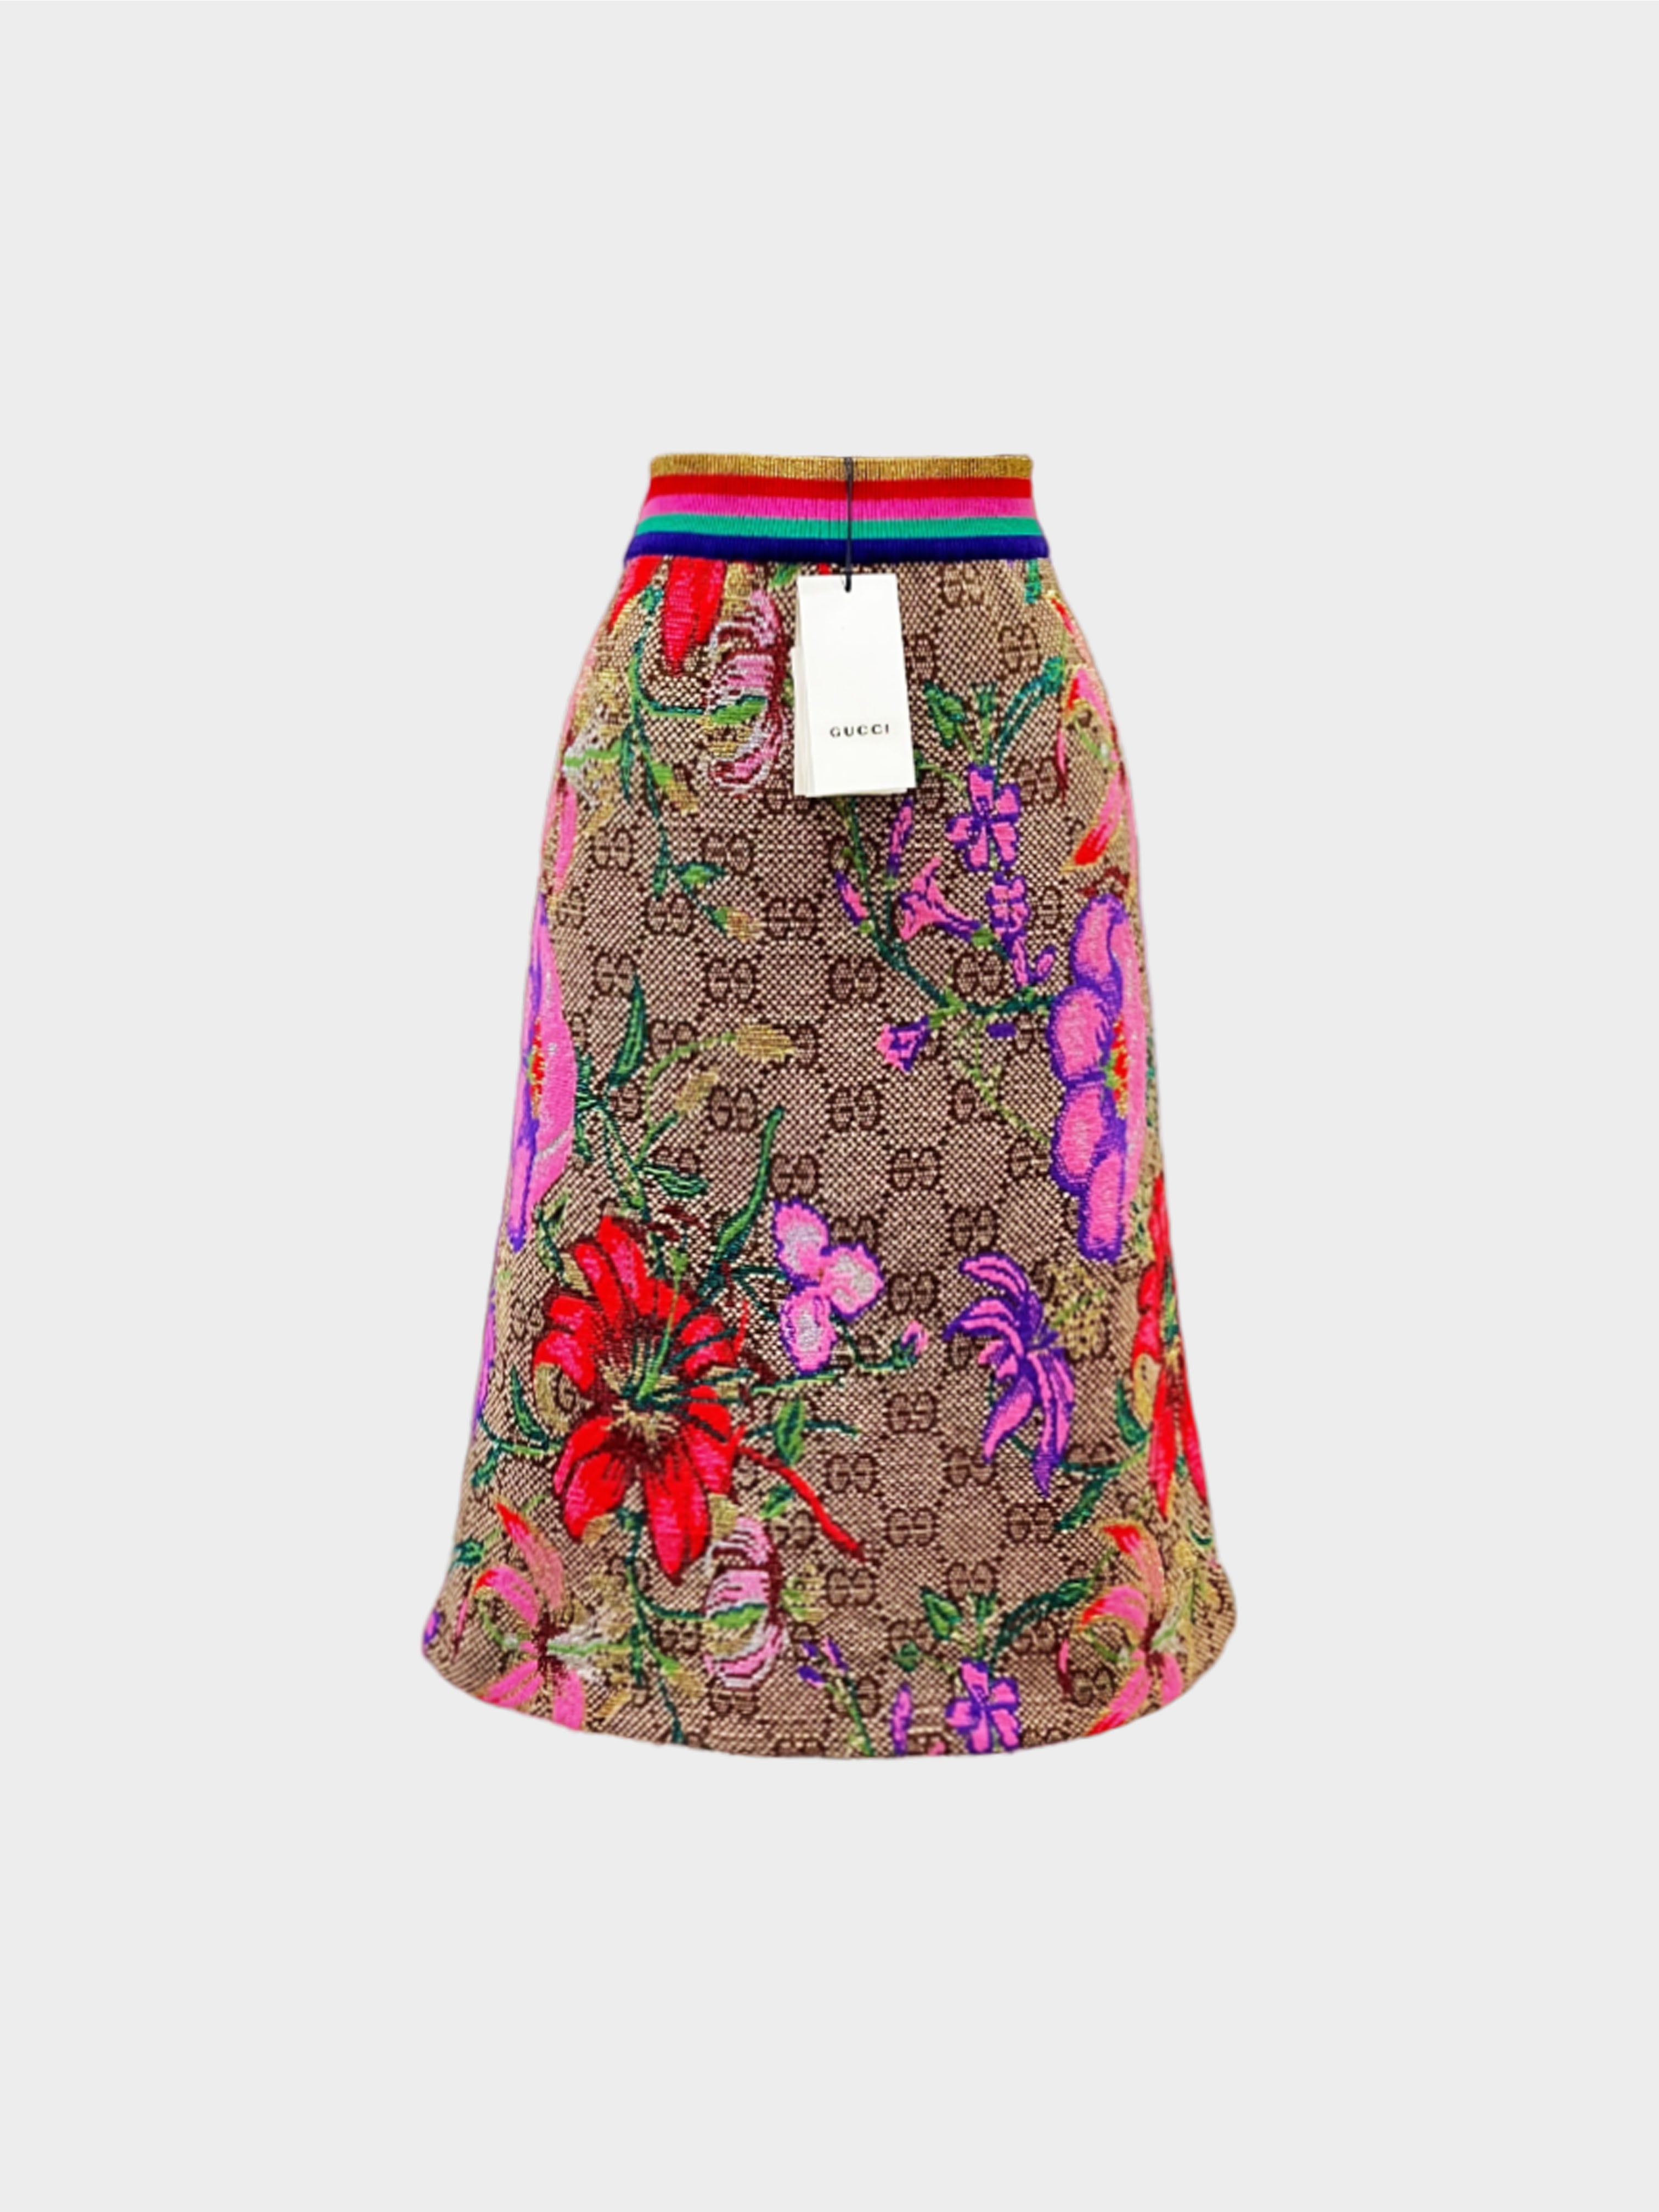 Gucci 2019 Floral Print Monogram Skirt